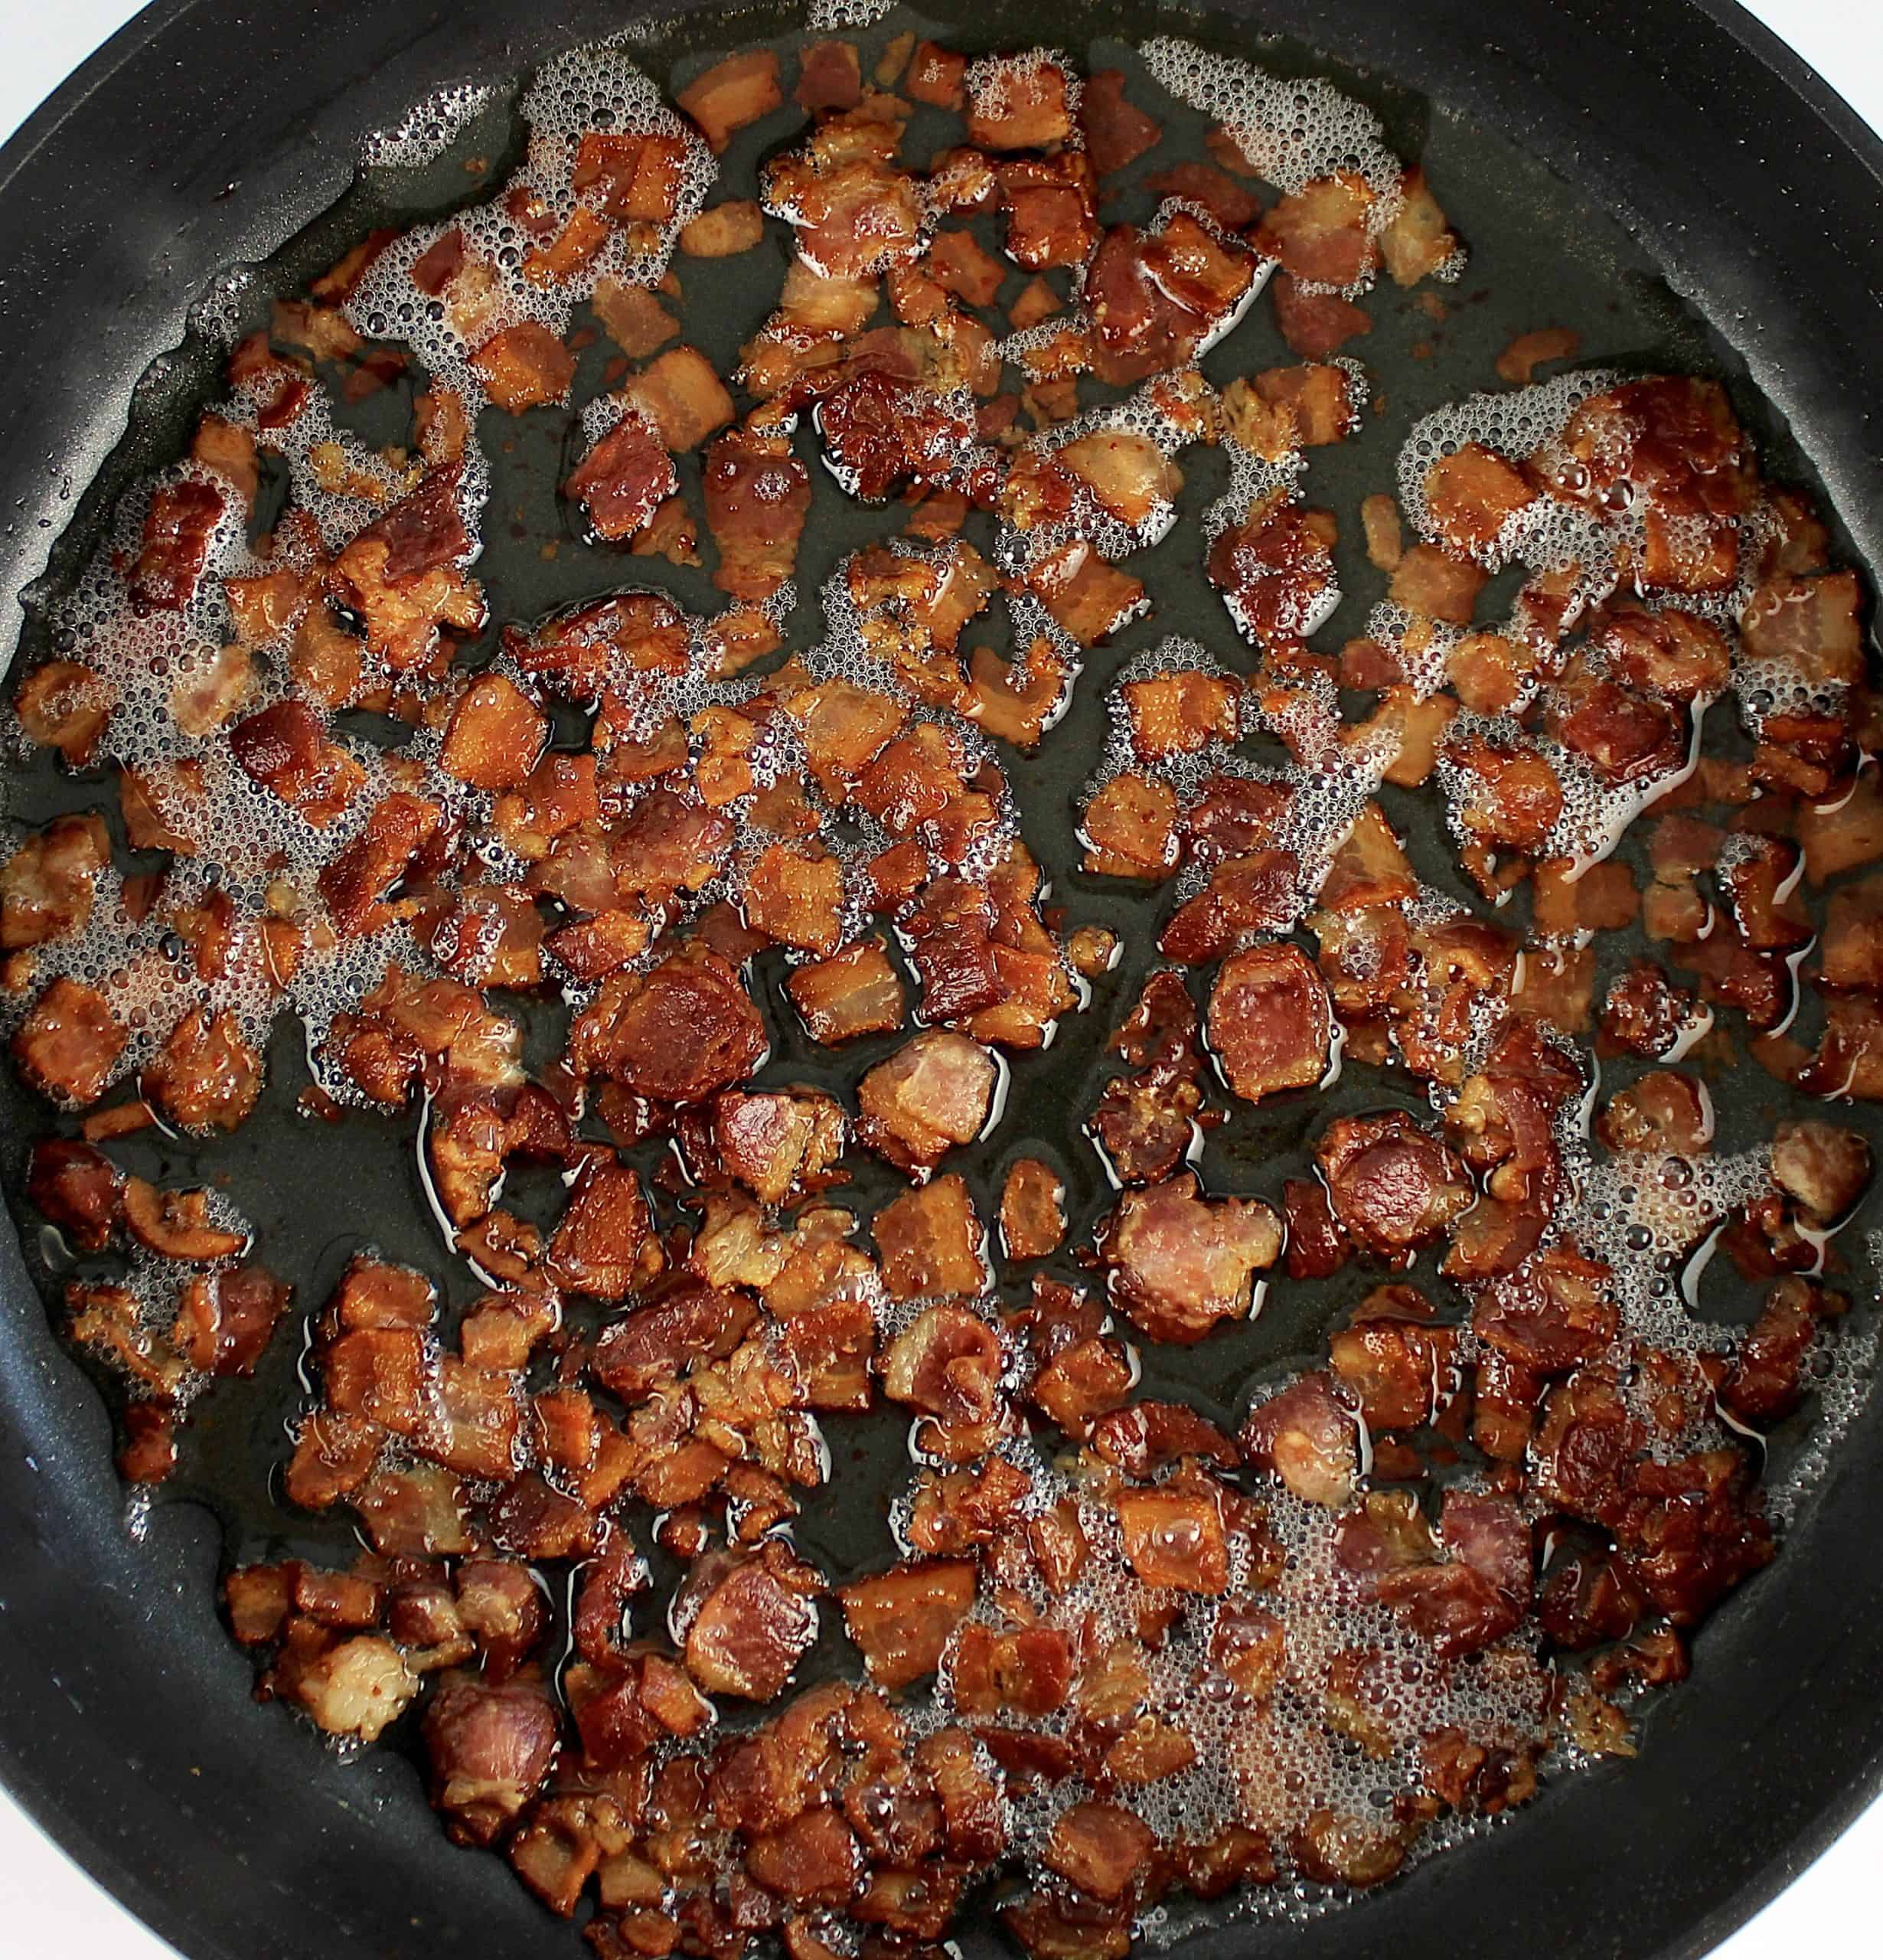 chopped bacon fried crispy in skillet